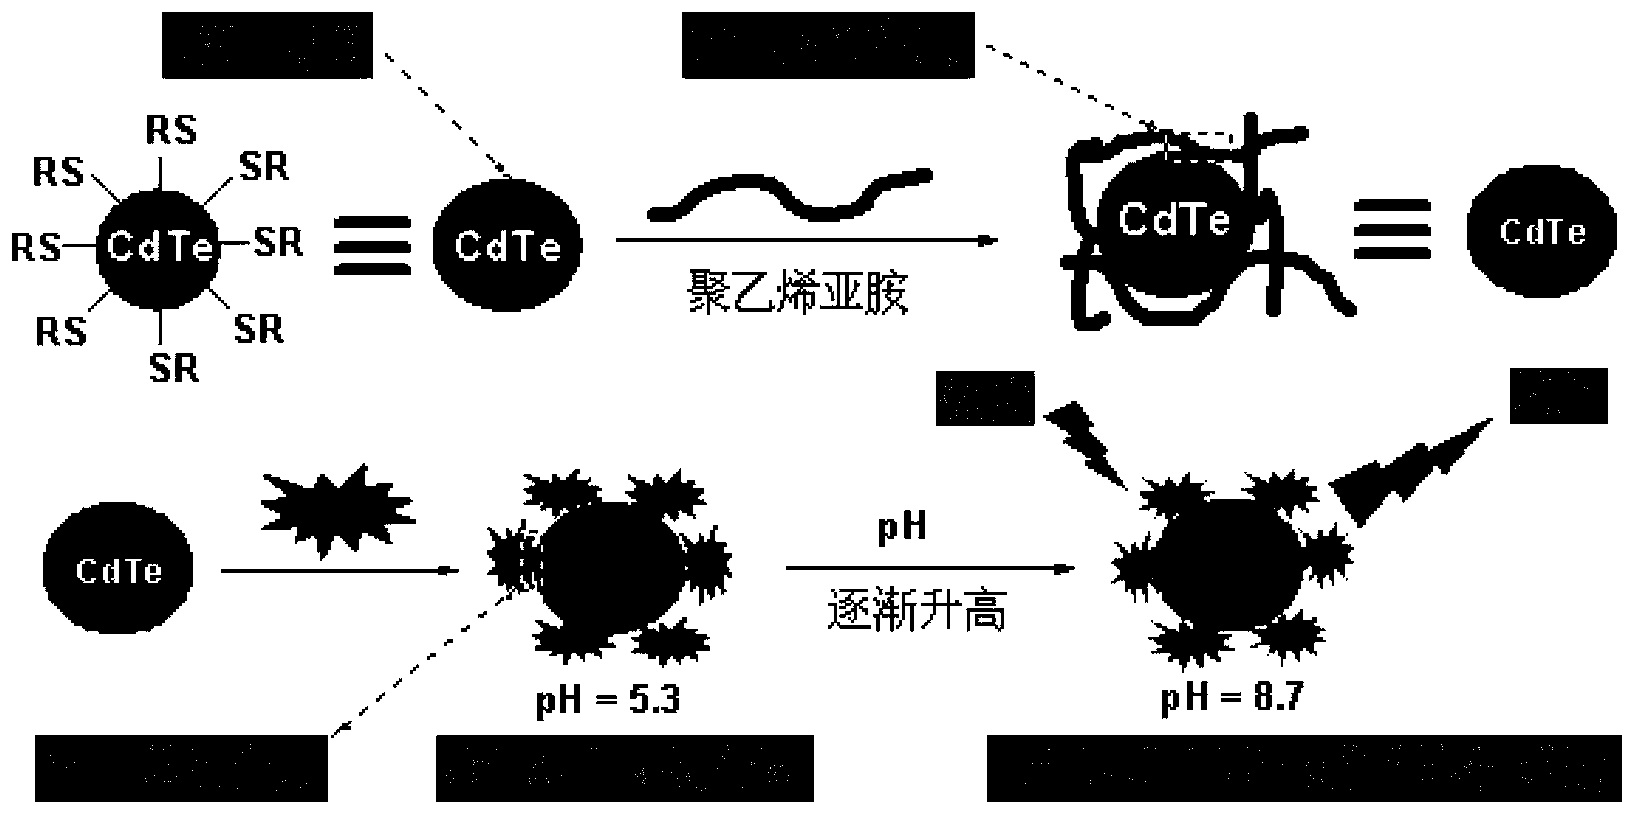 Manufacturing method of pH ratio fluorescence probe based on organic dye-quantum dot compound